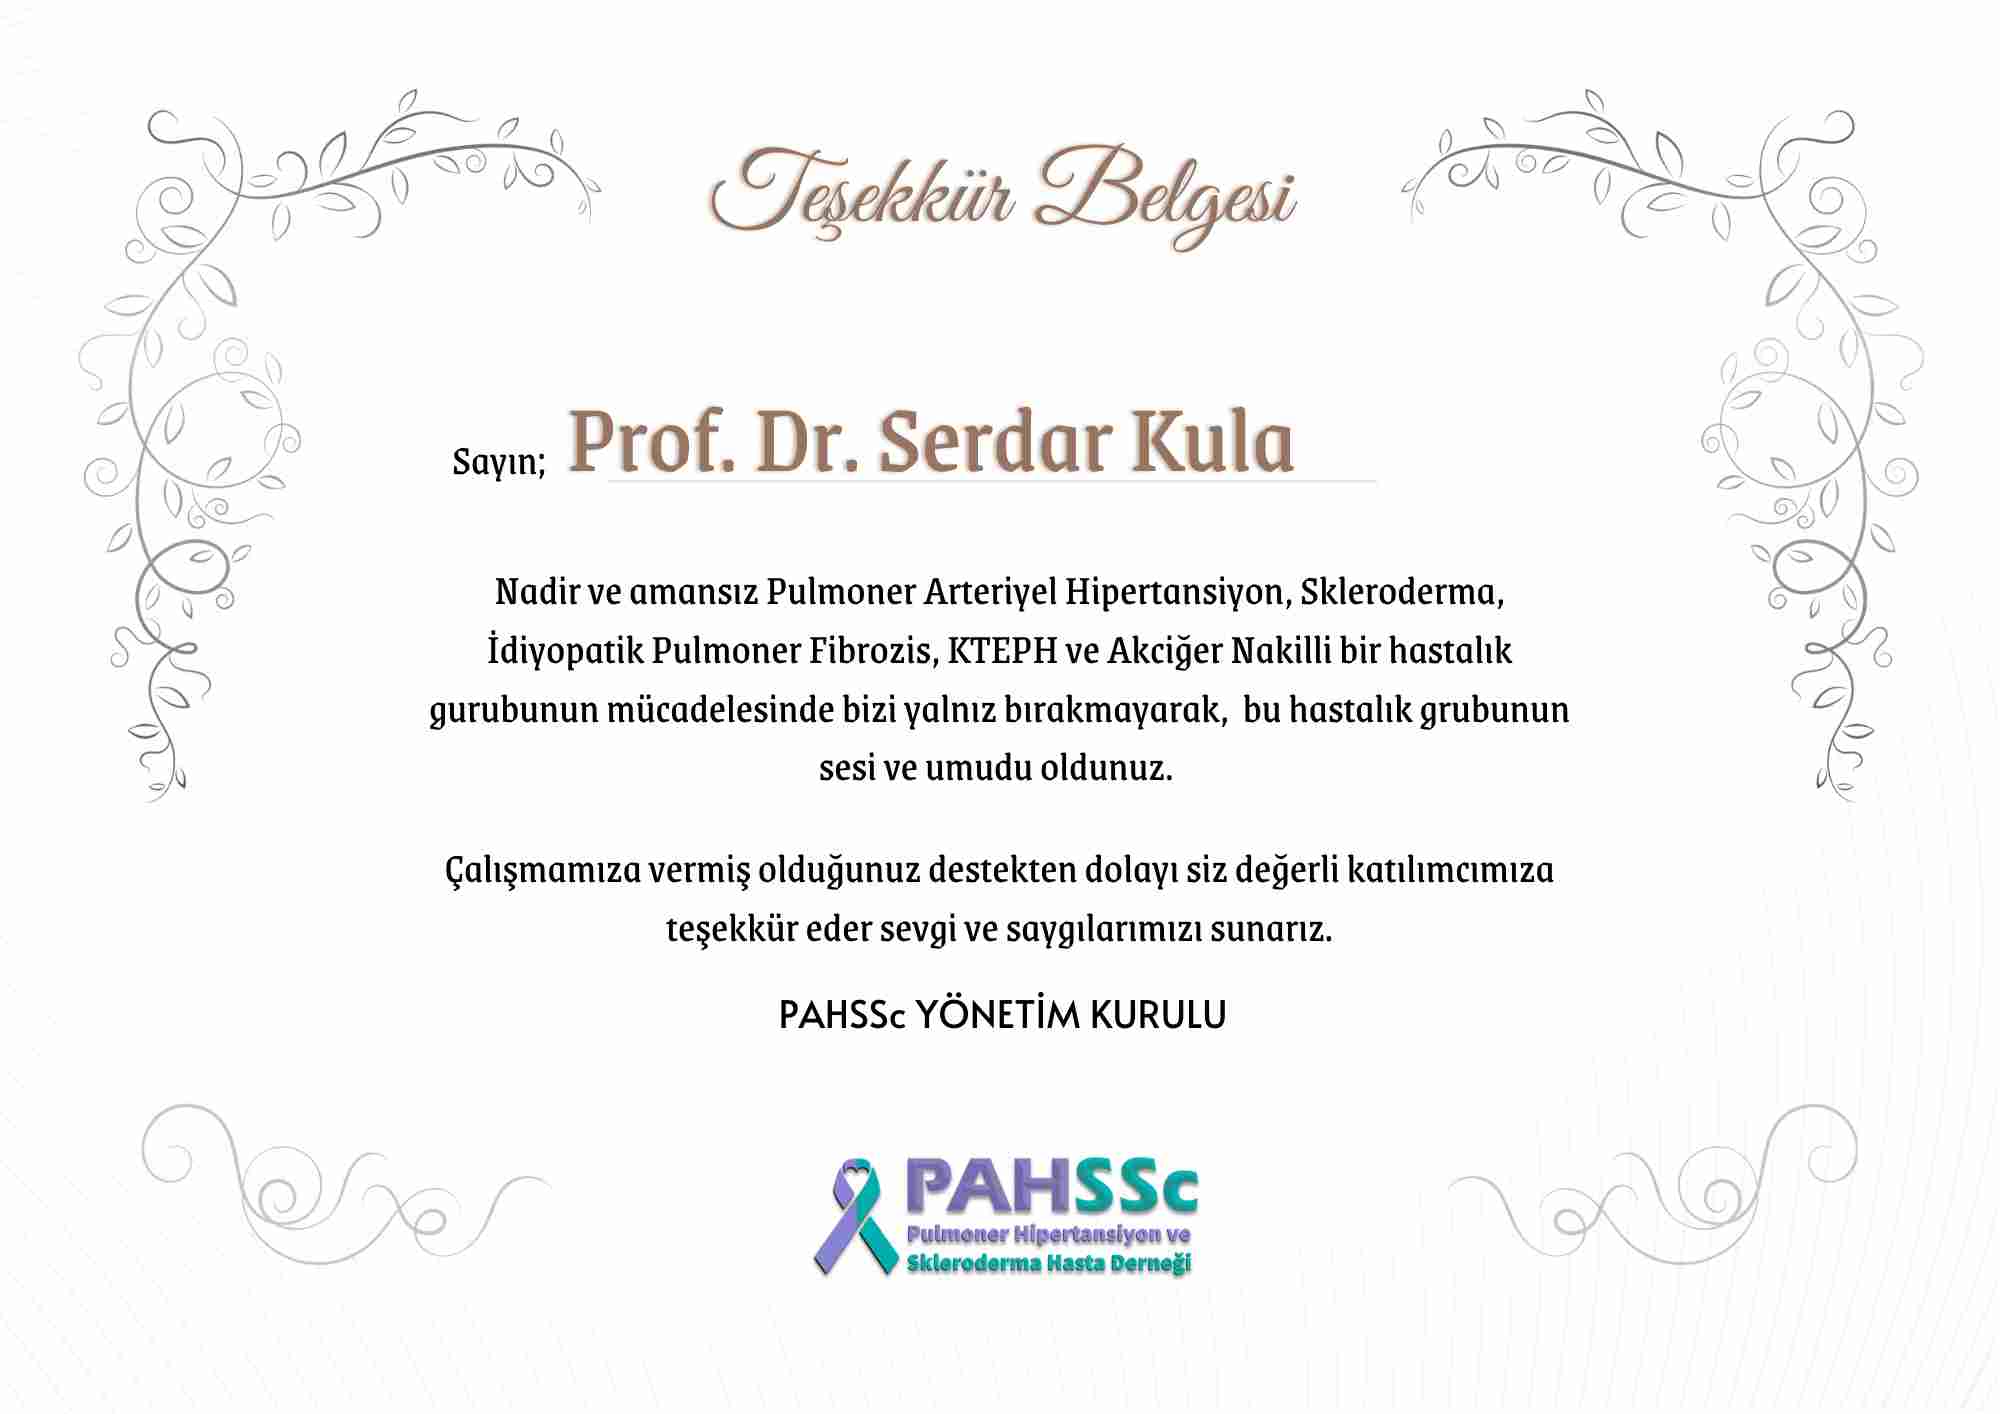 Prof. Dr. Serdar Kula